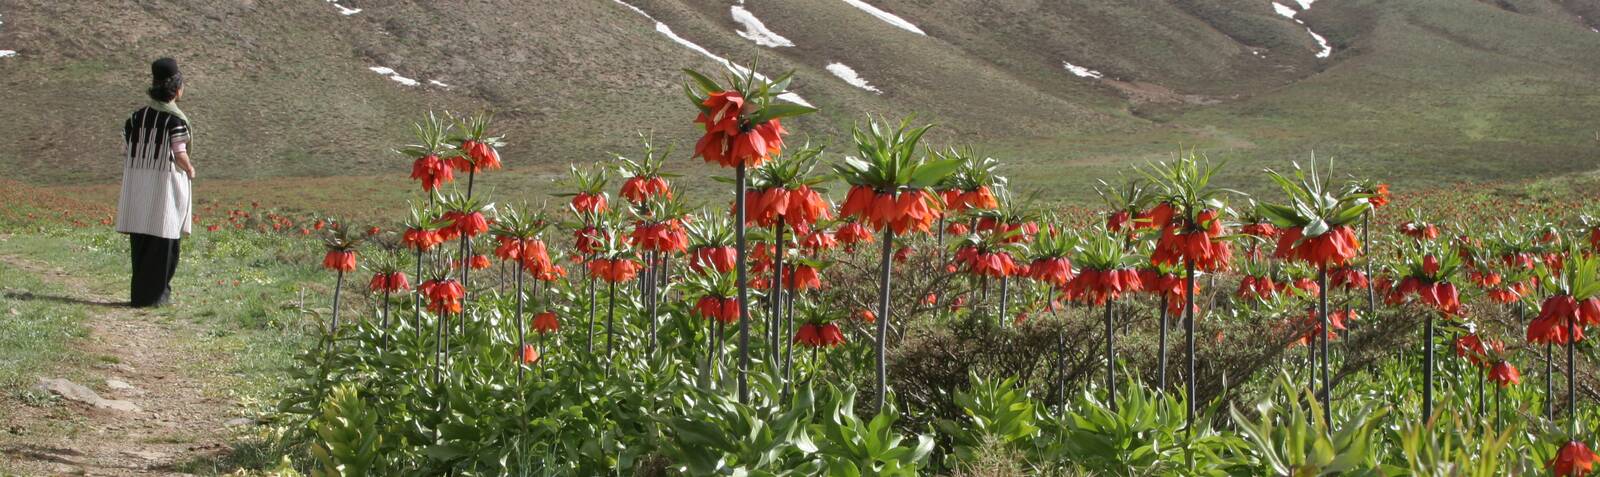 Plain of Overturned Tulips (Fritillaria) 